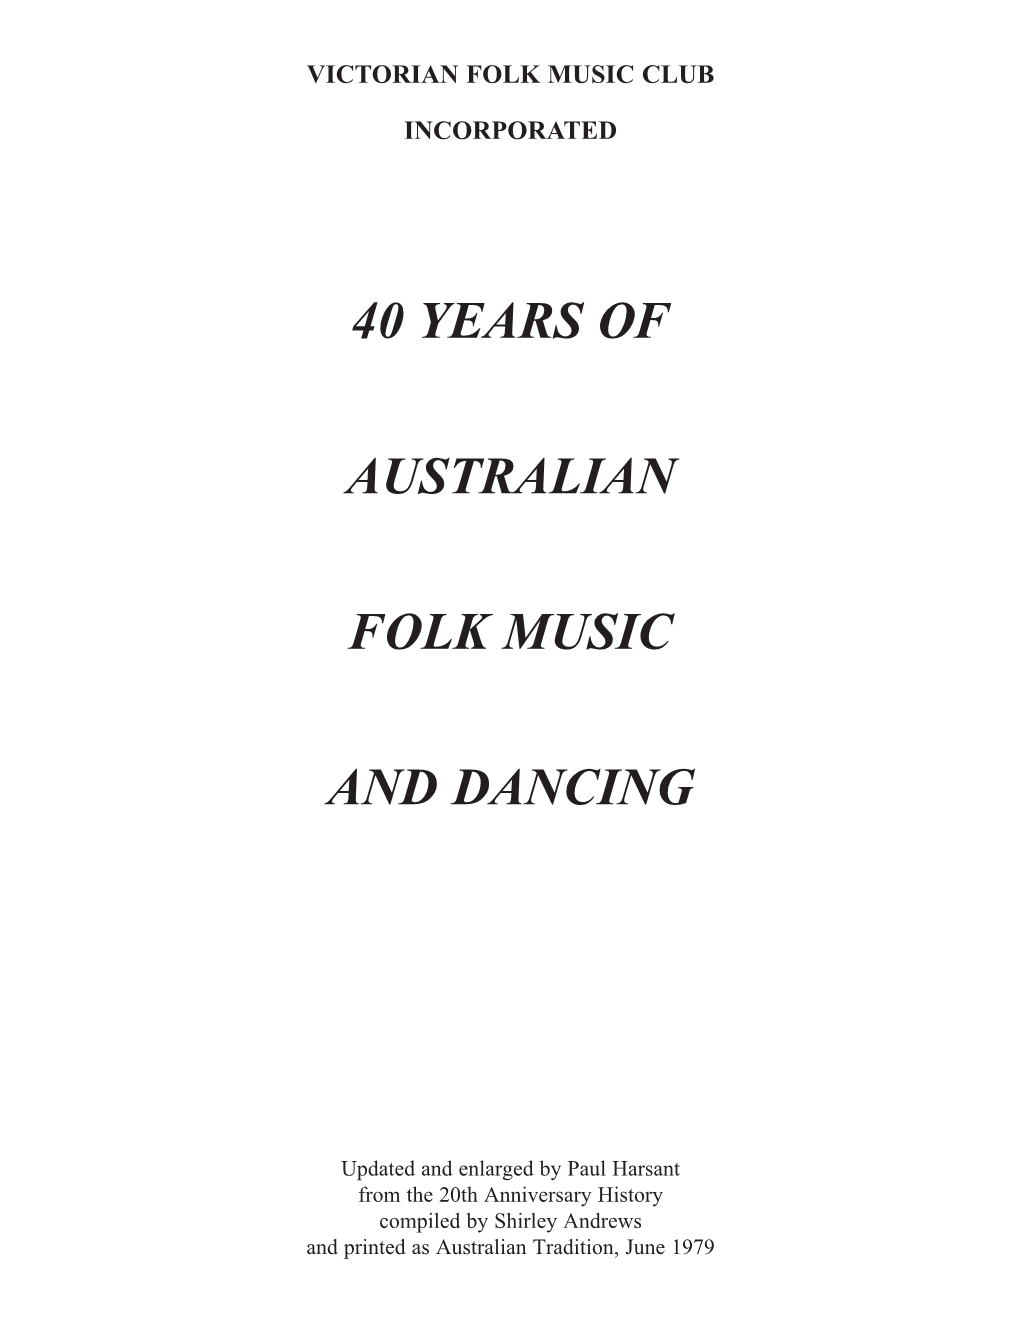 40 Years of Australian Folk Music and Dancing